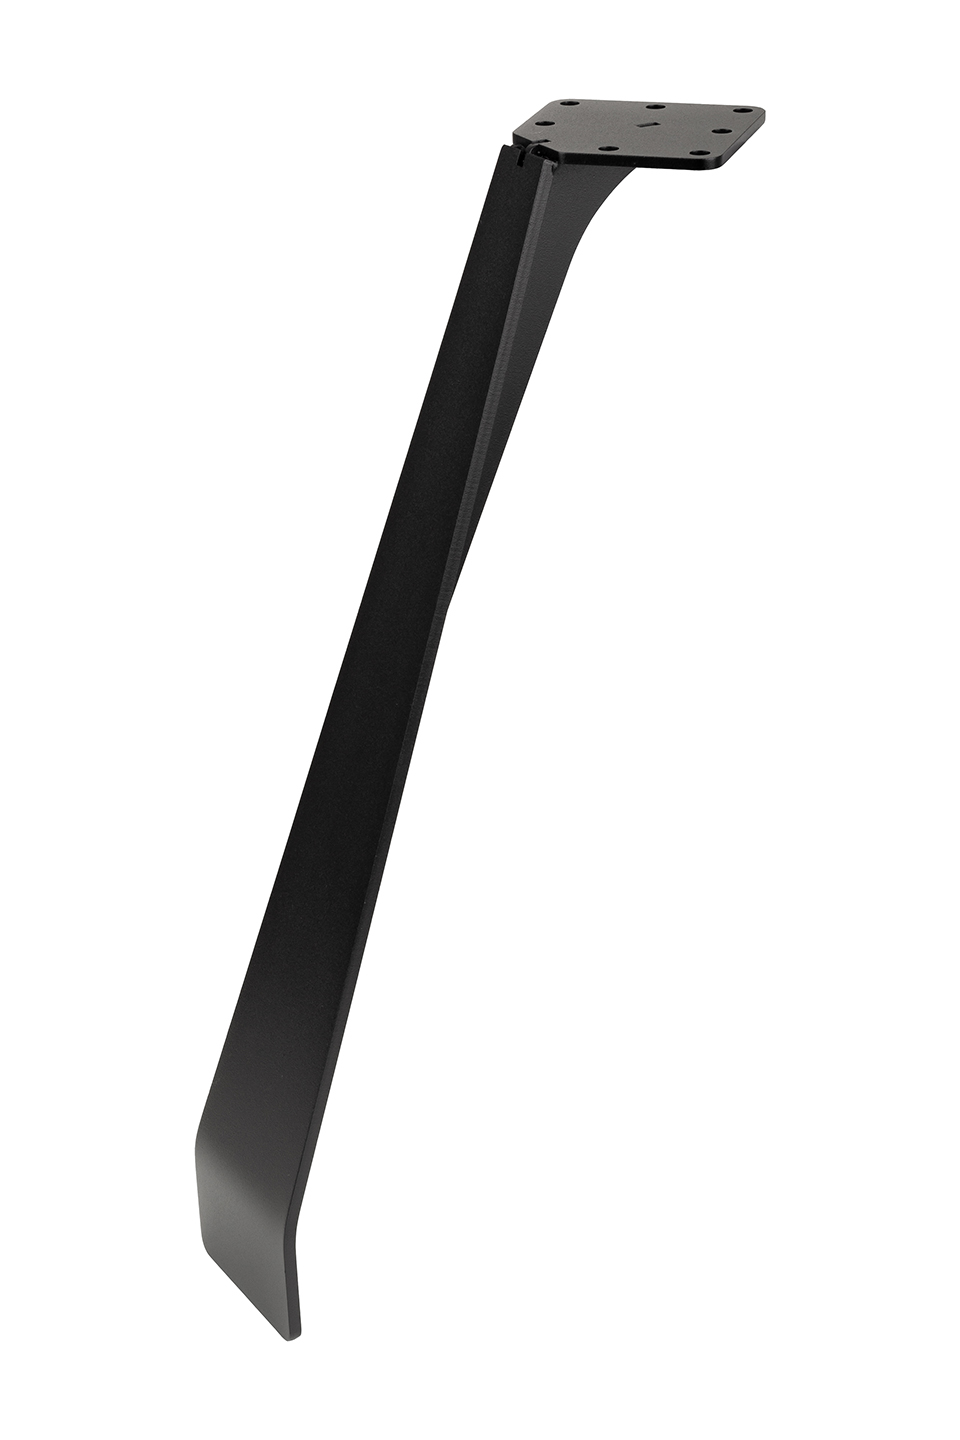 Mila Design Stolová noha ET N42080 420 mm čierna